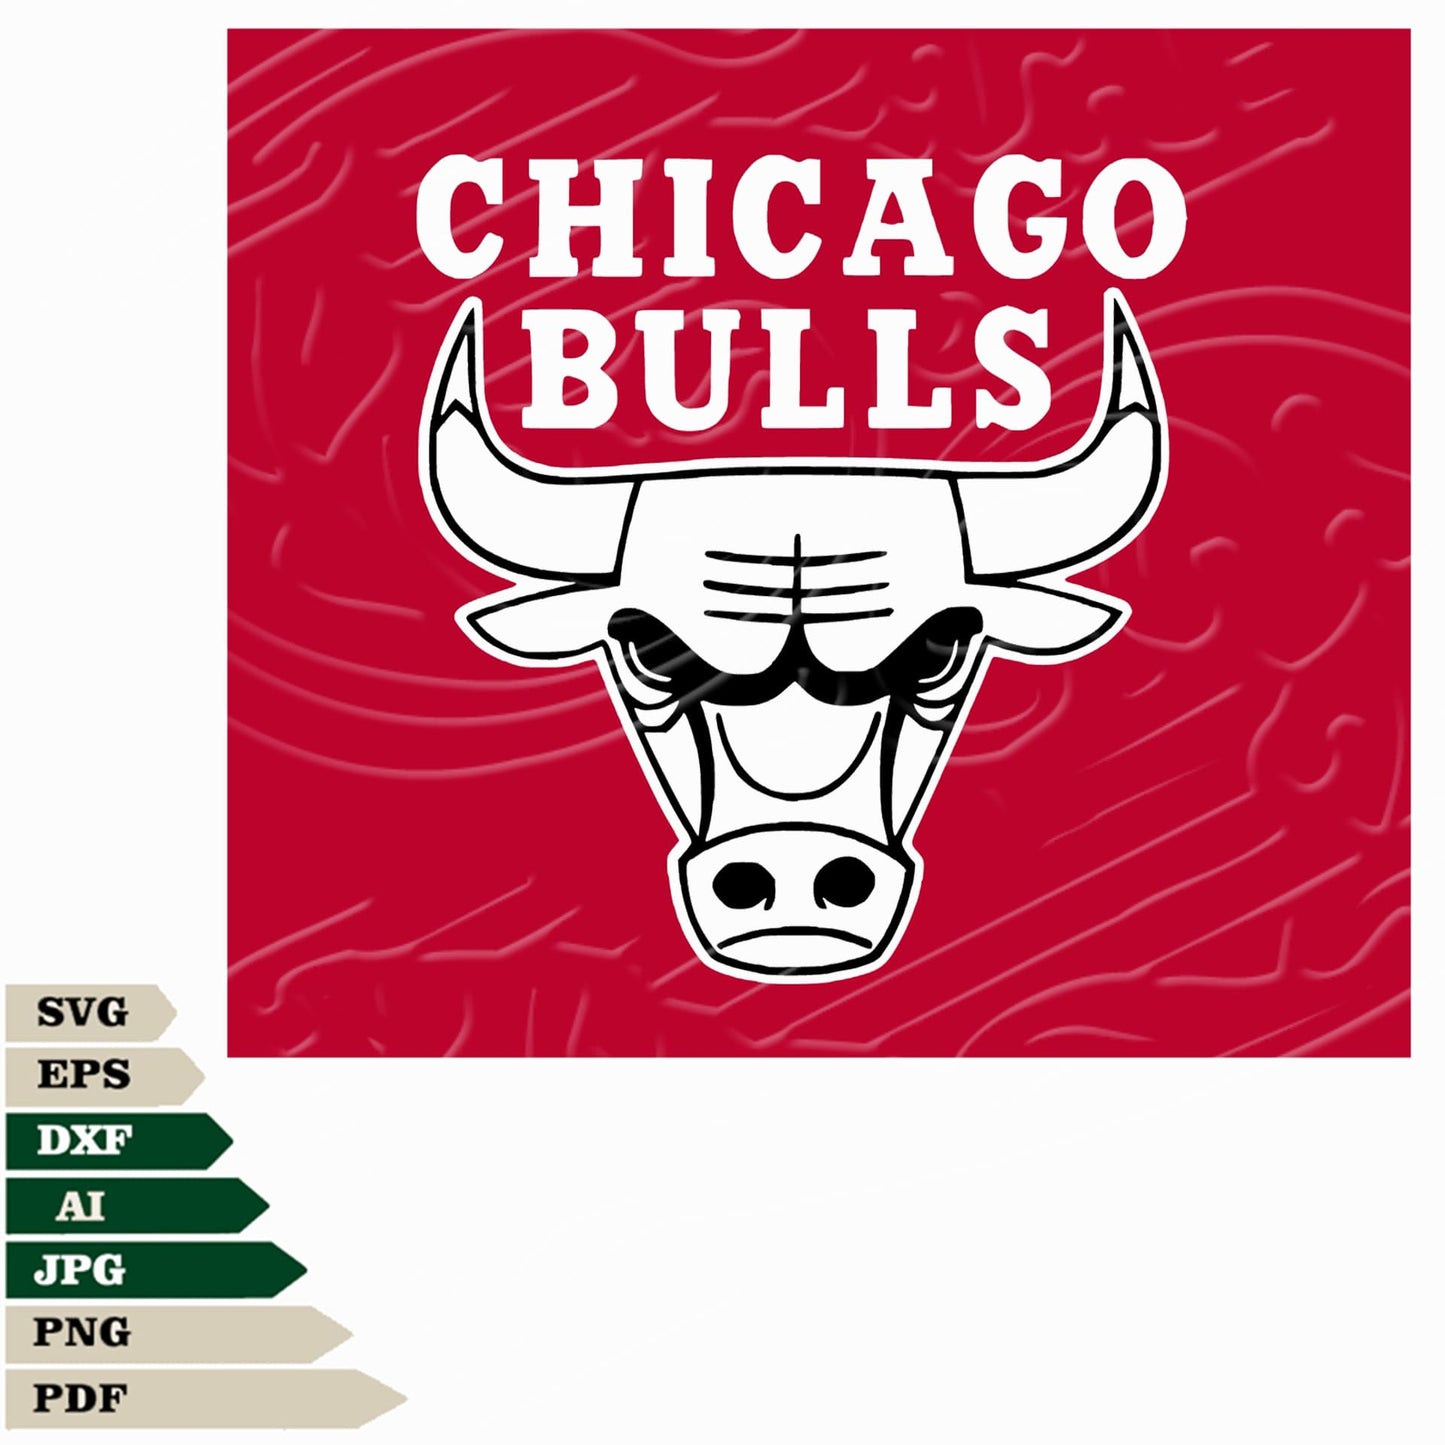 Chicago Bulls Svg File, Bulls Svg Design, Chicago Bulls Logo Png, Chicago Bulls Basketball Team Vector Graphics, Chicago Bulls Logo Svg For Tattoo, Bulls Svg For Cricut